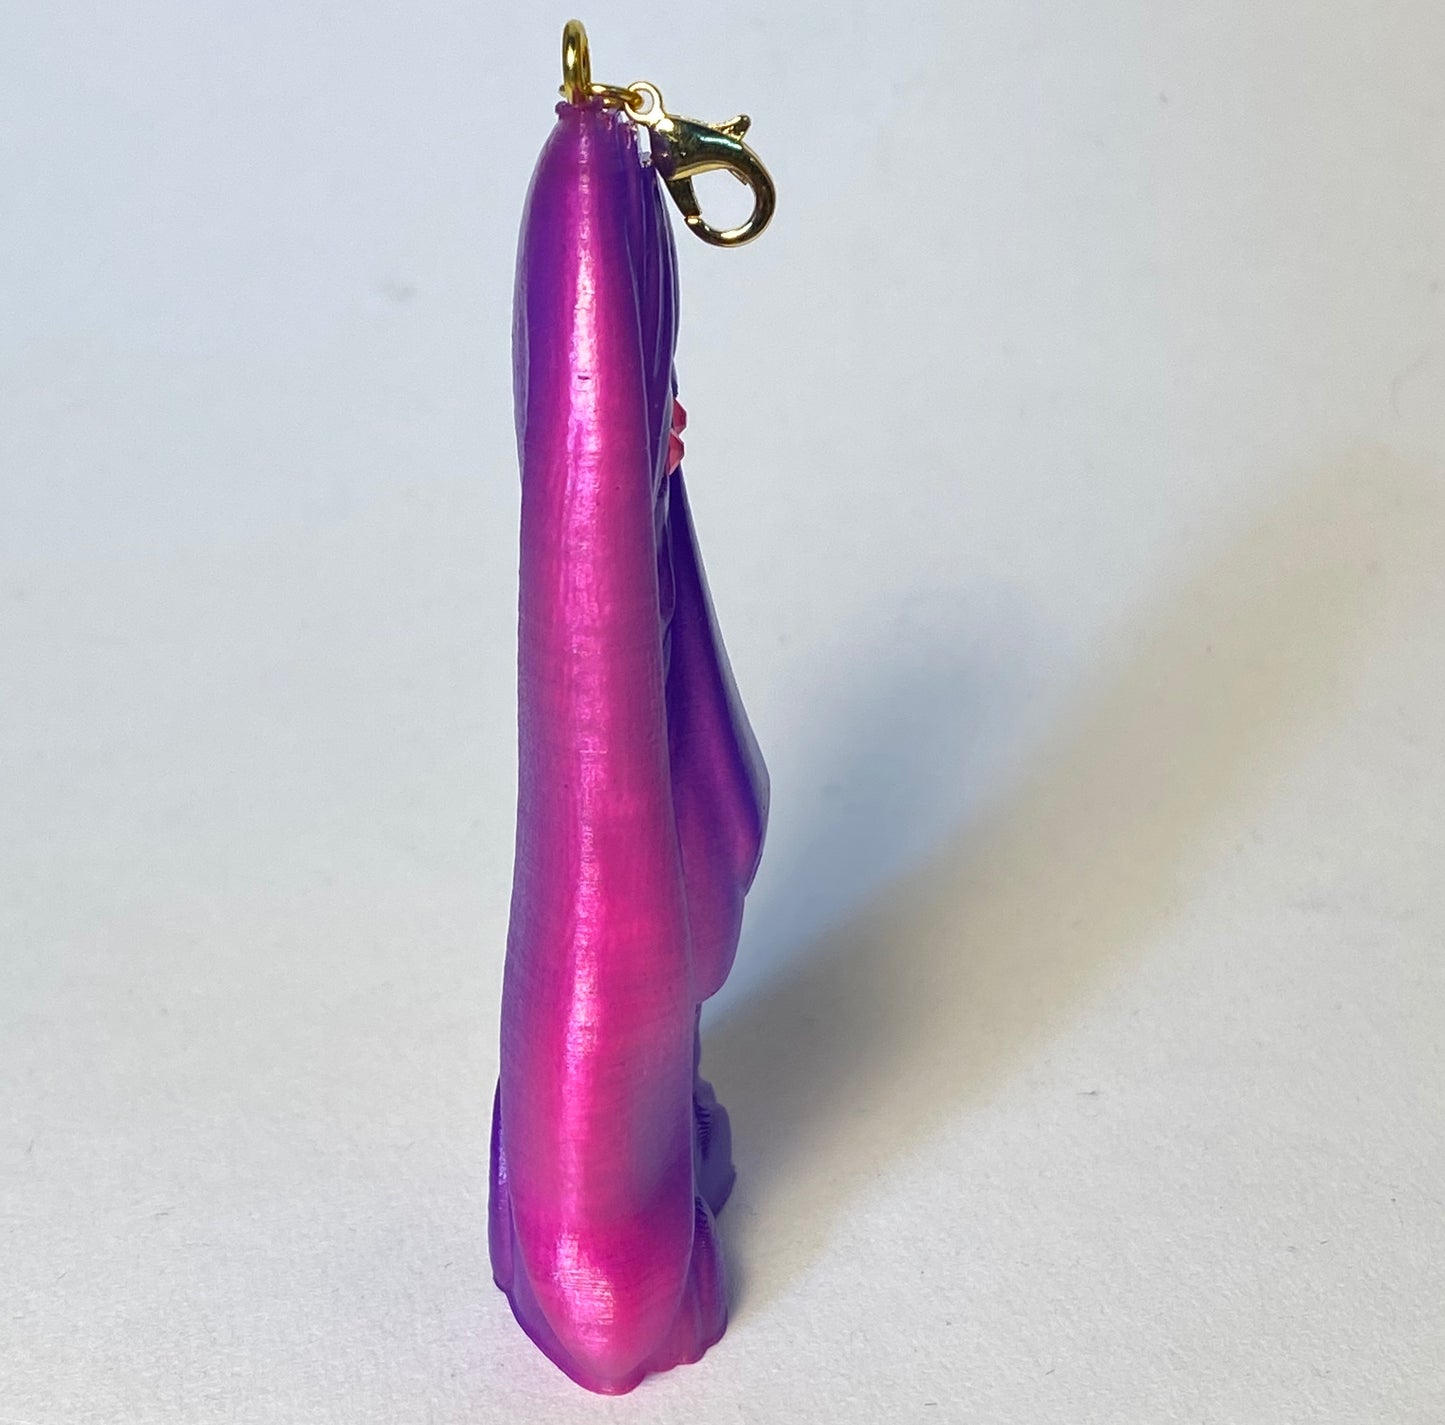 Super Flat Sad Dog Necklace Charm: Pink and Purple